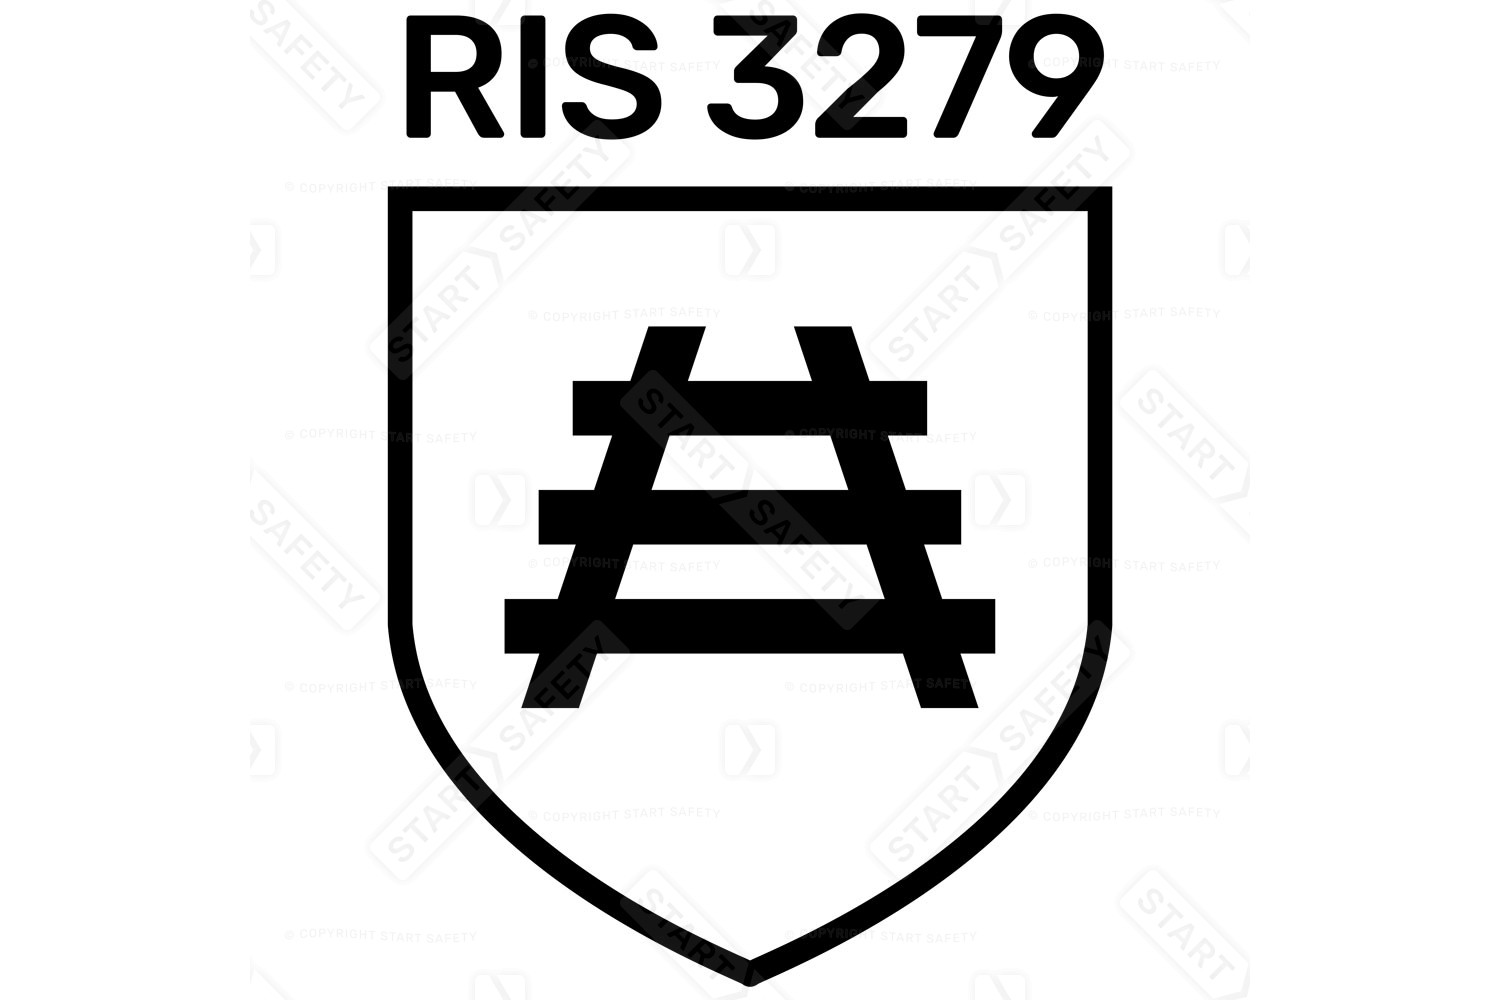 RIS 3279 Railway Standard